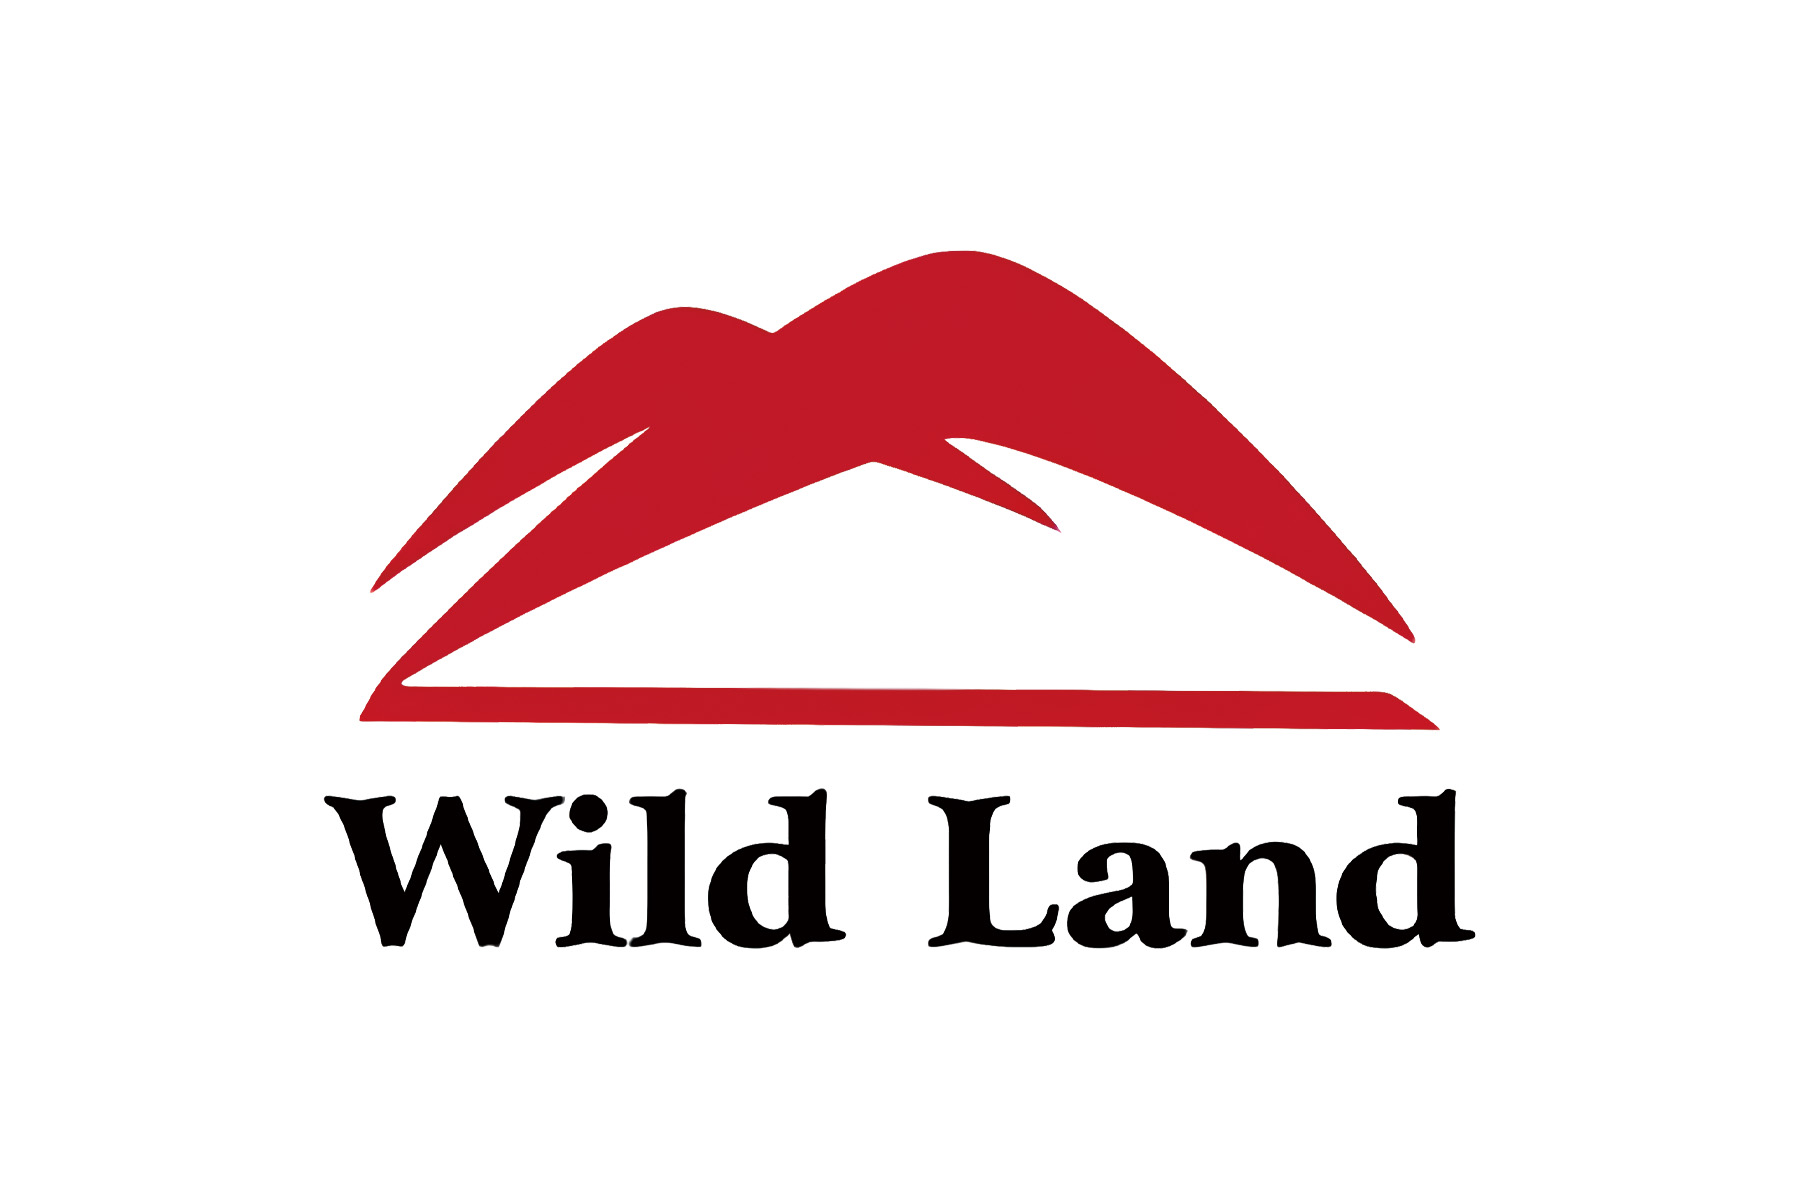 WildLand